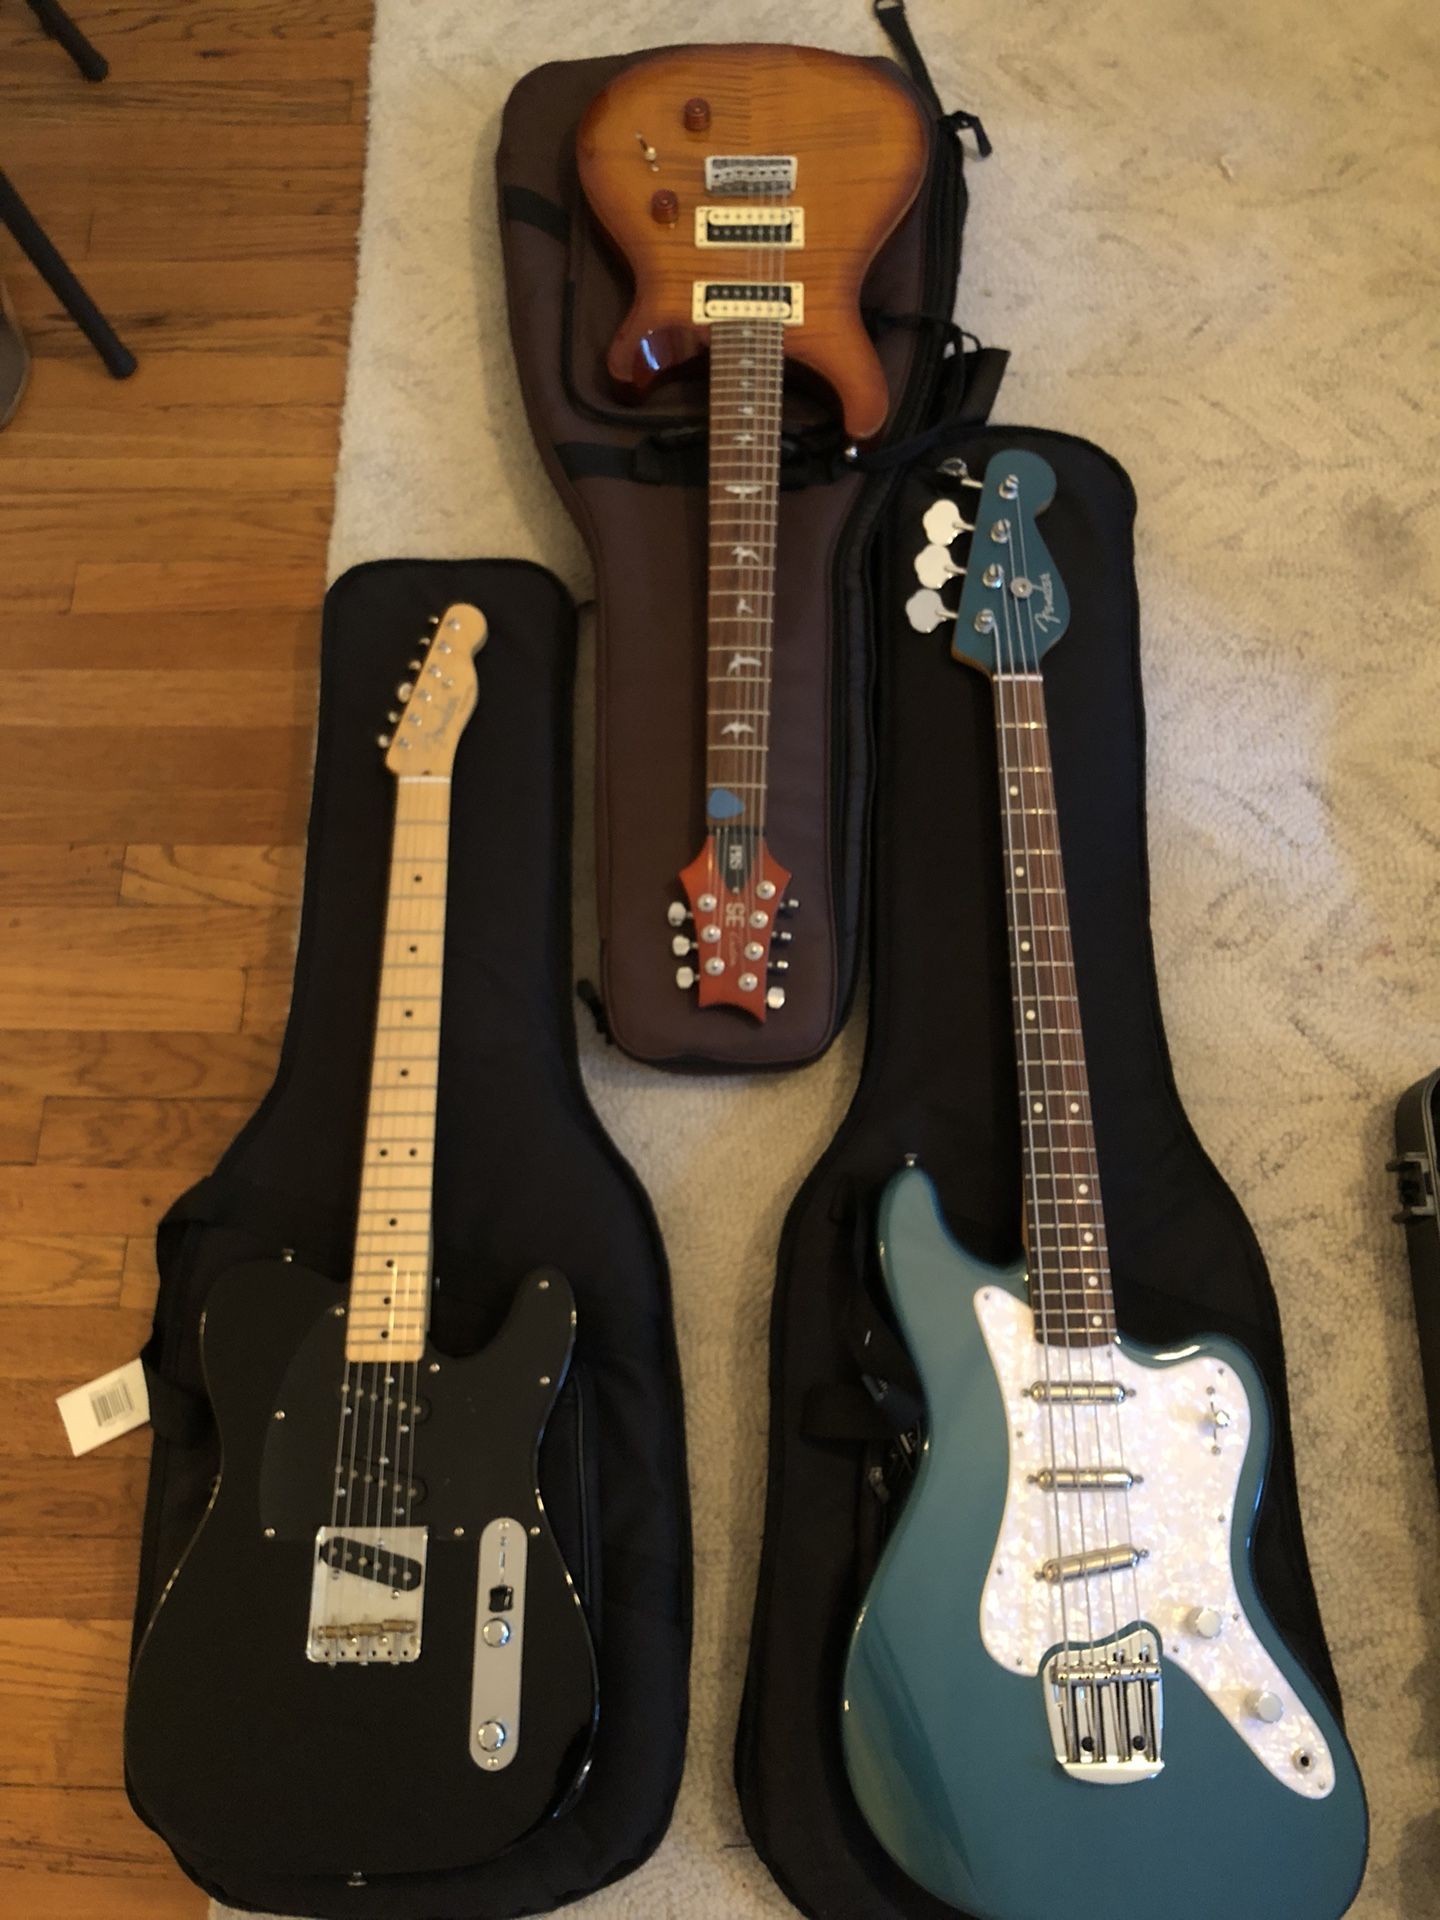 Fender & PRS guitars - like new!